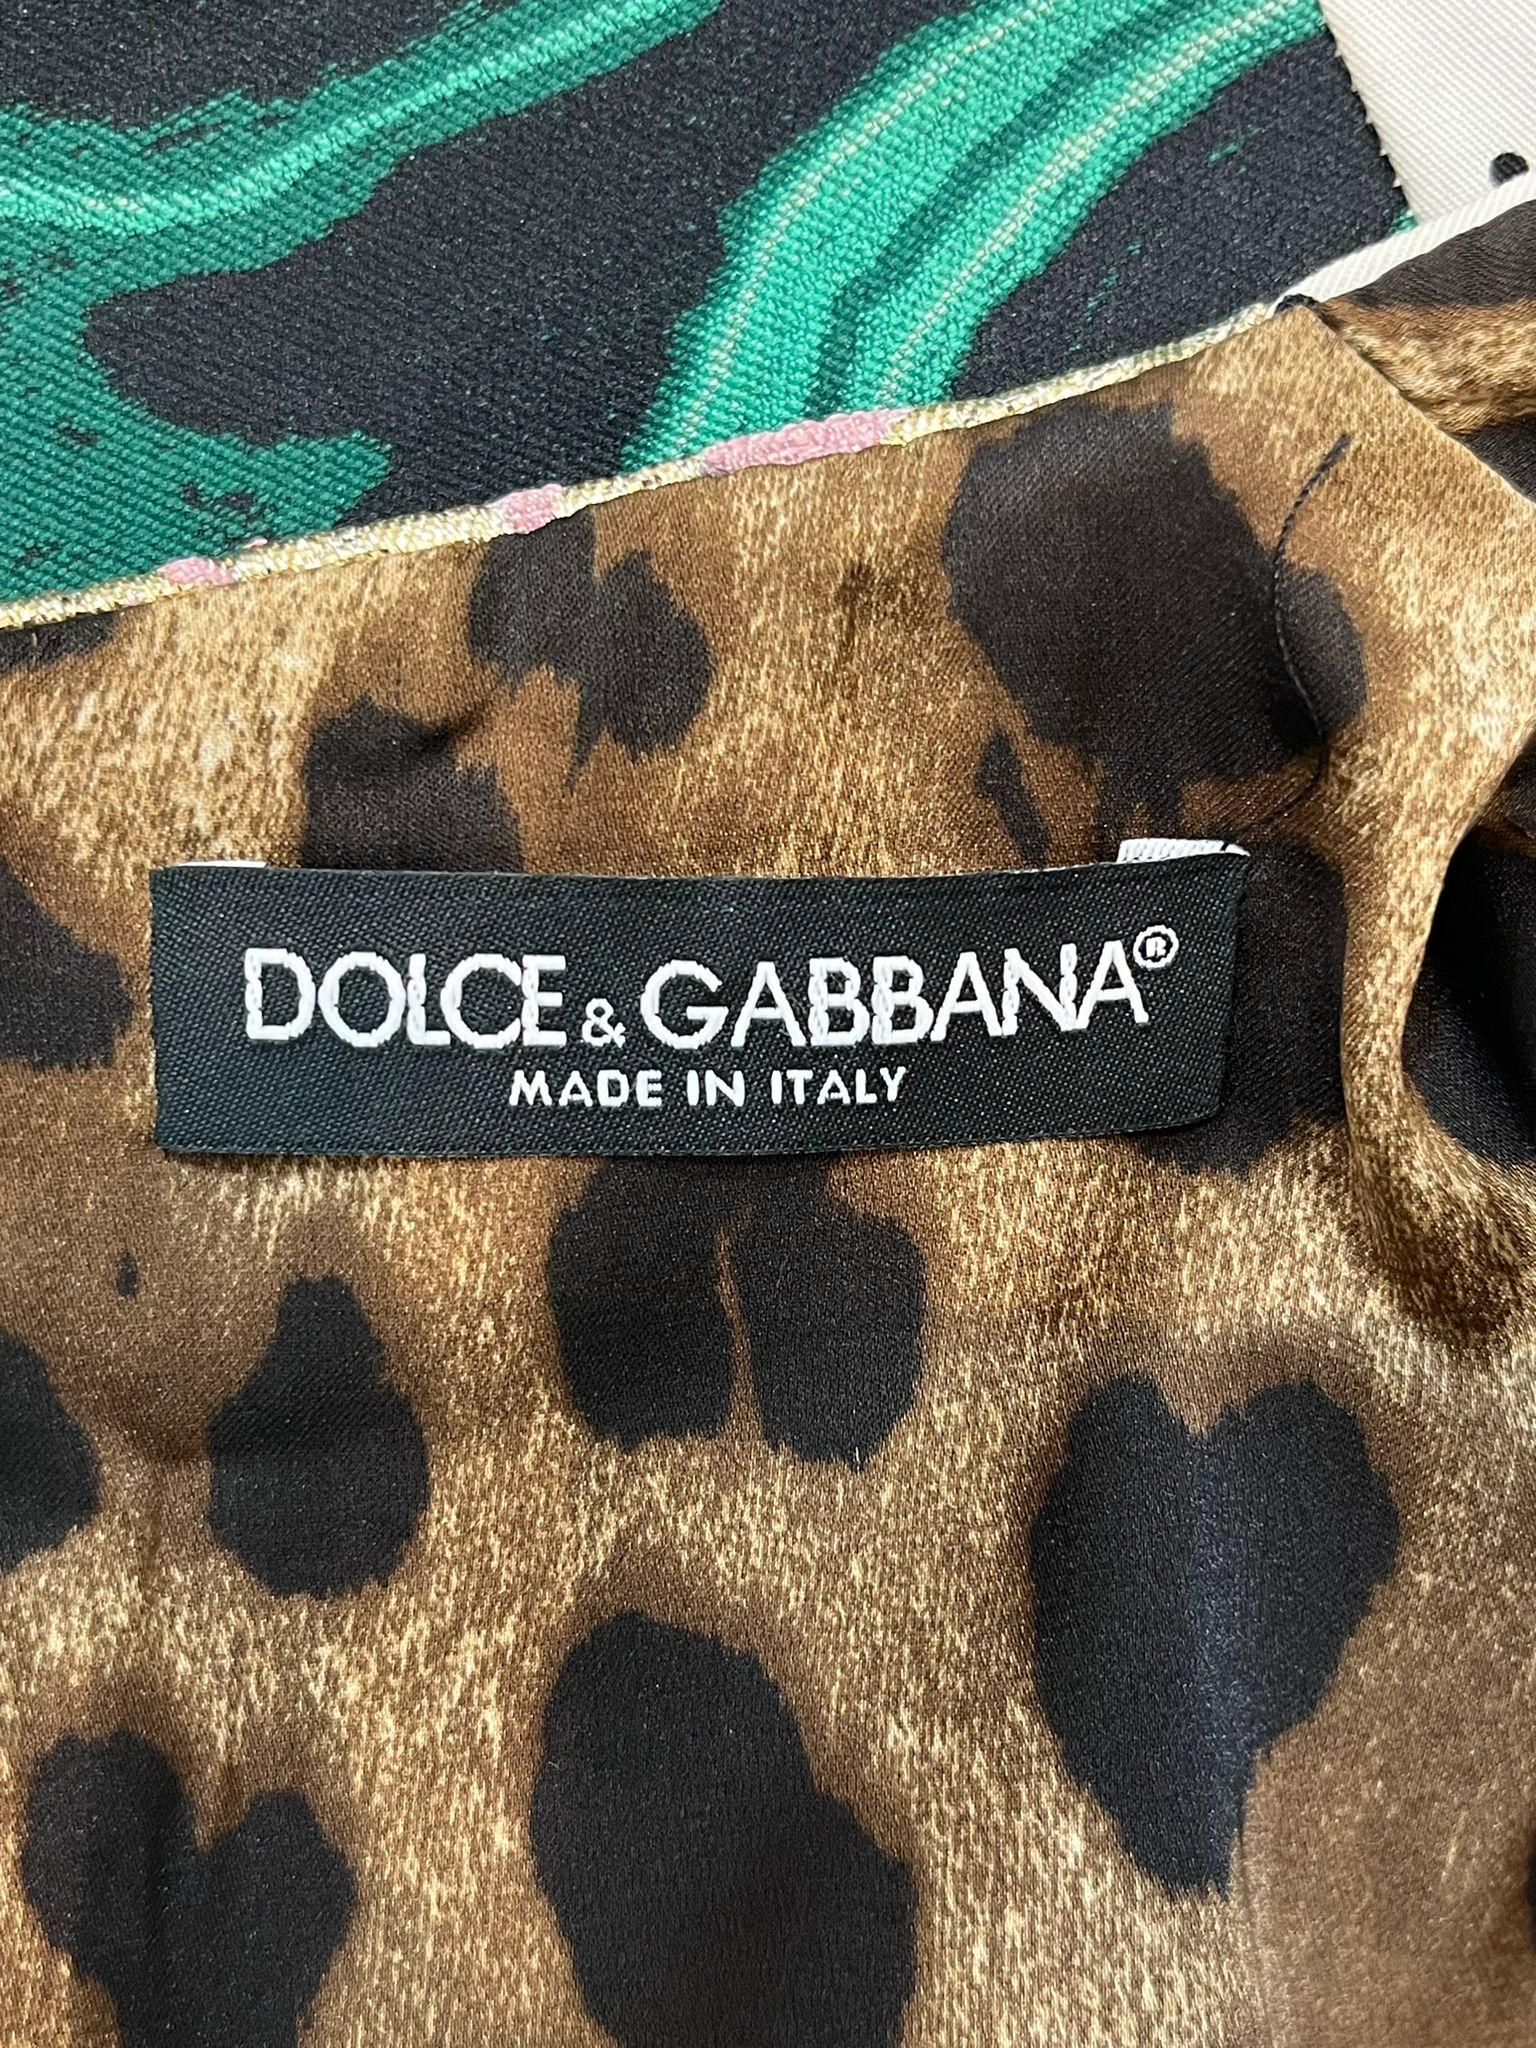 Dolce & Gabbana Brocade & Lame Patchwork Dress For Sale 2